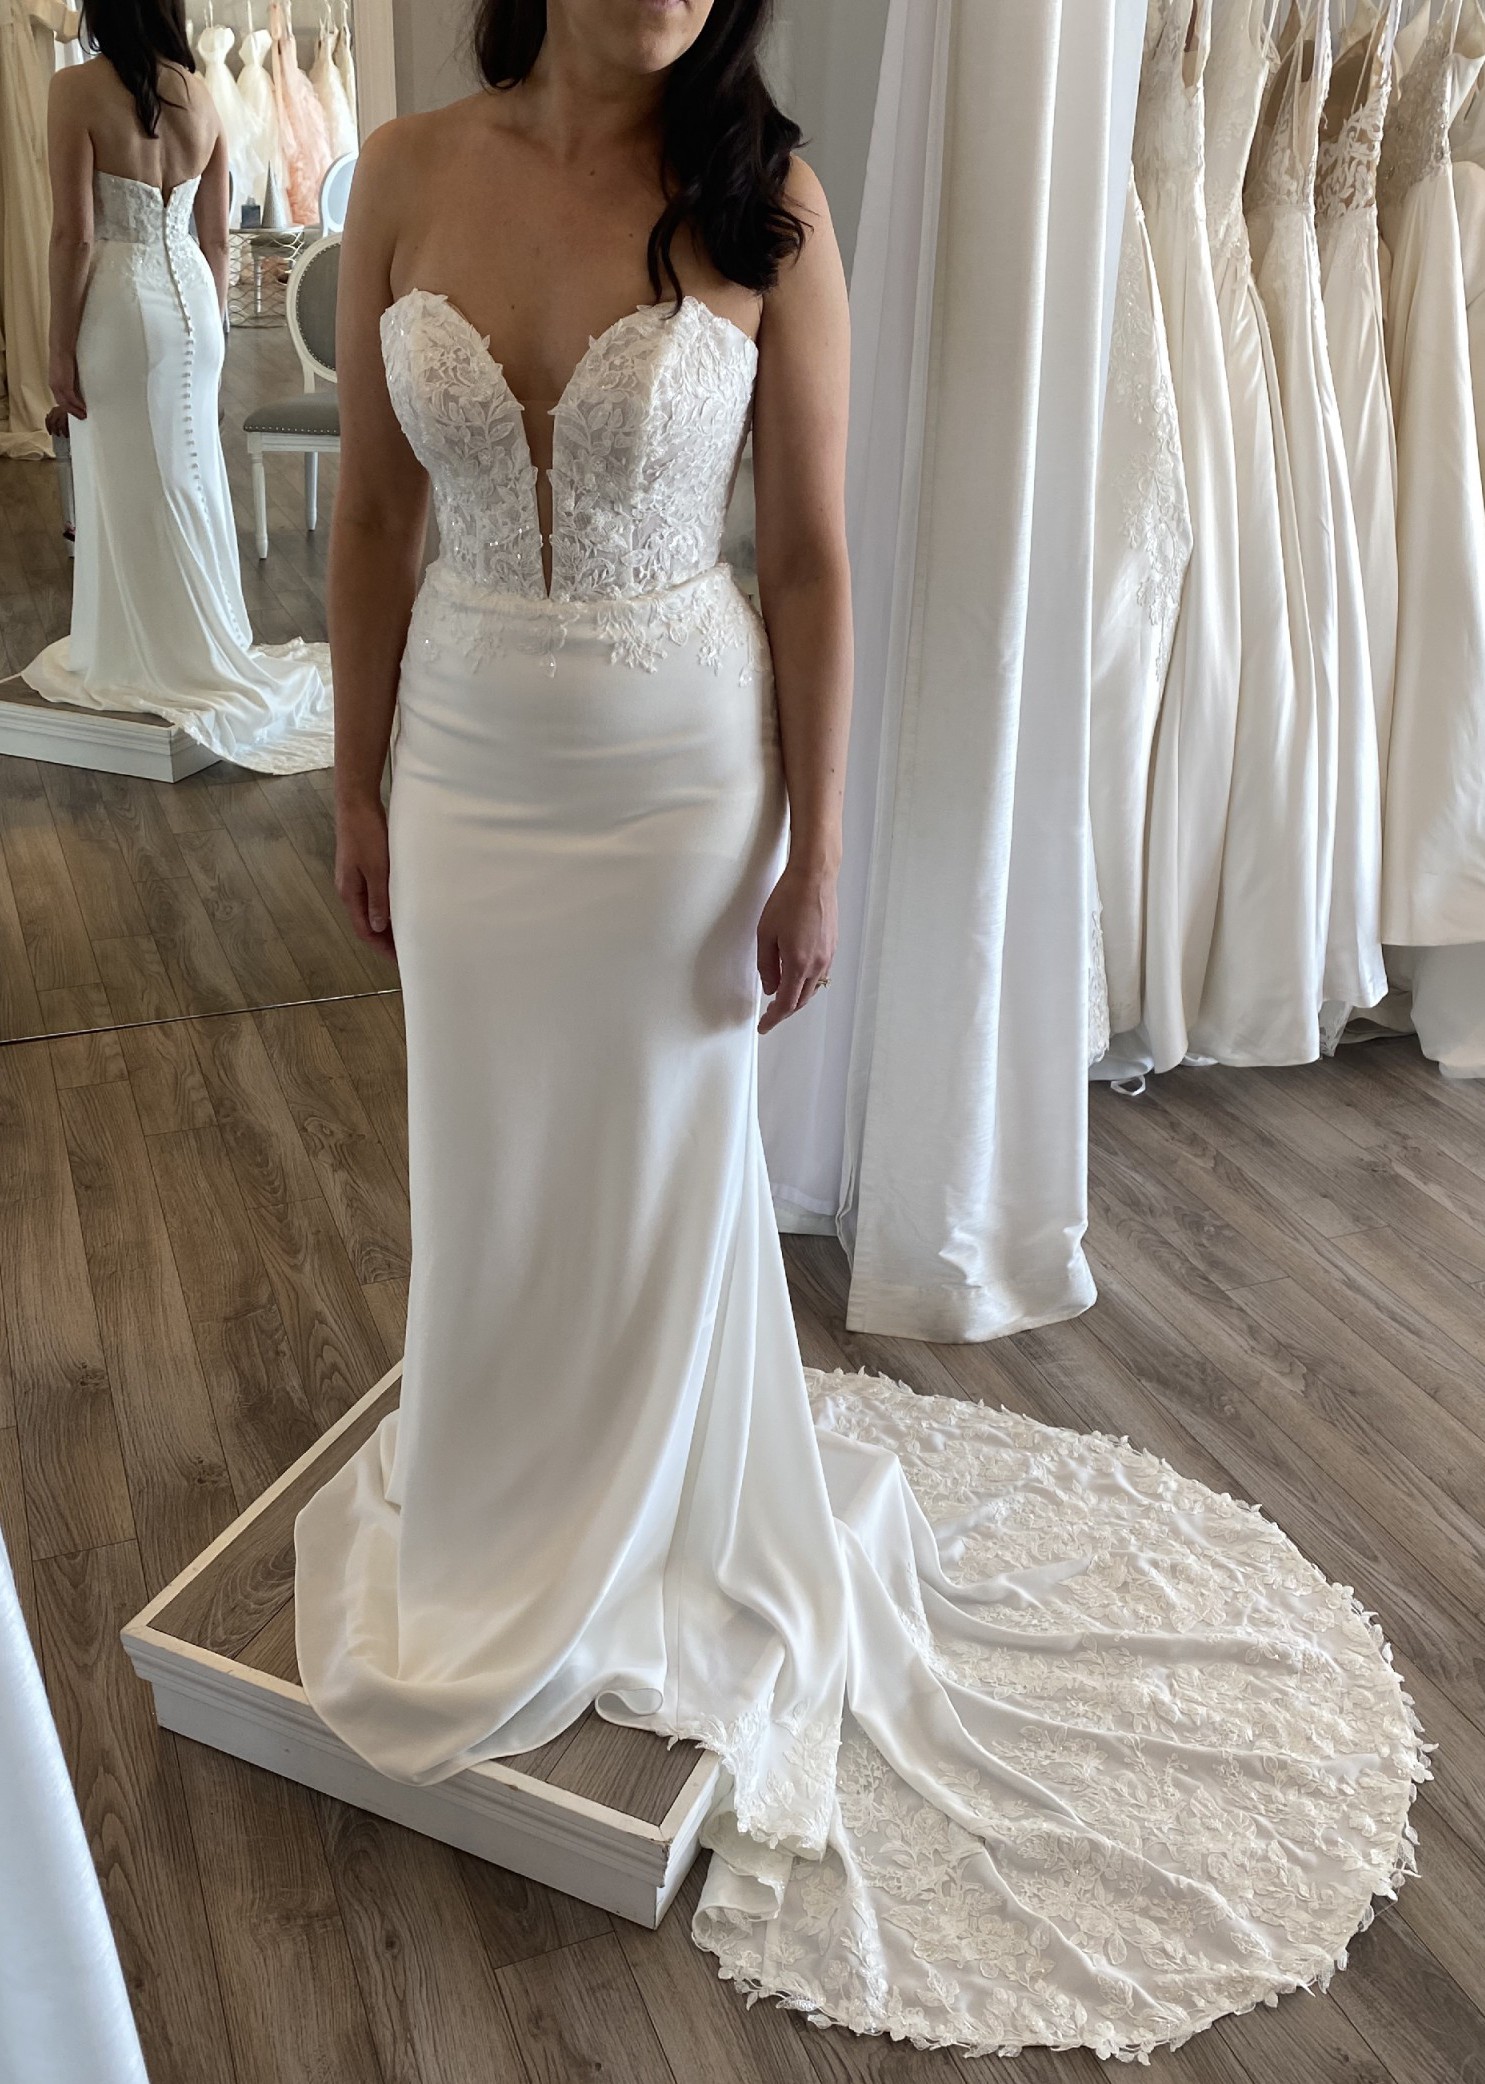 Stella York 7597 New Wedding Dress Save 51% - Stillwhite